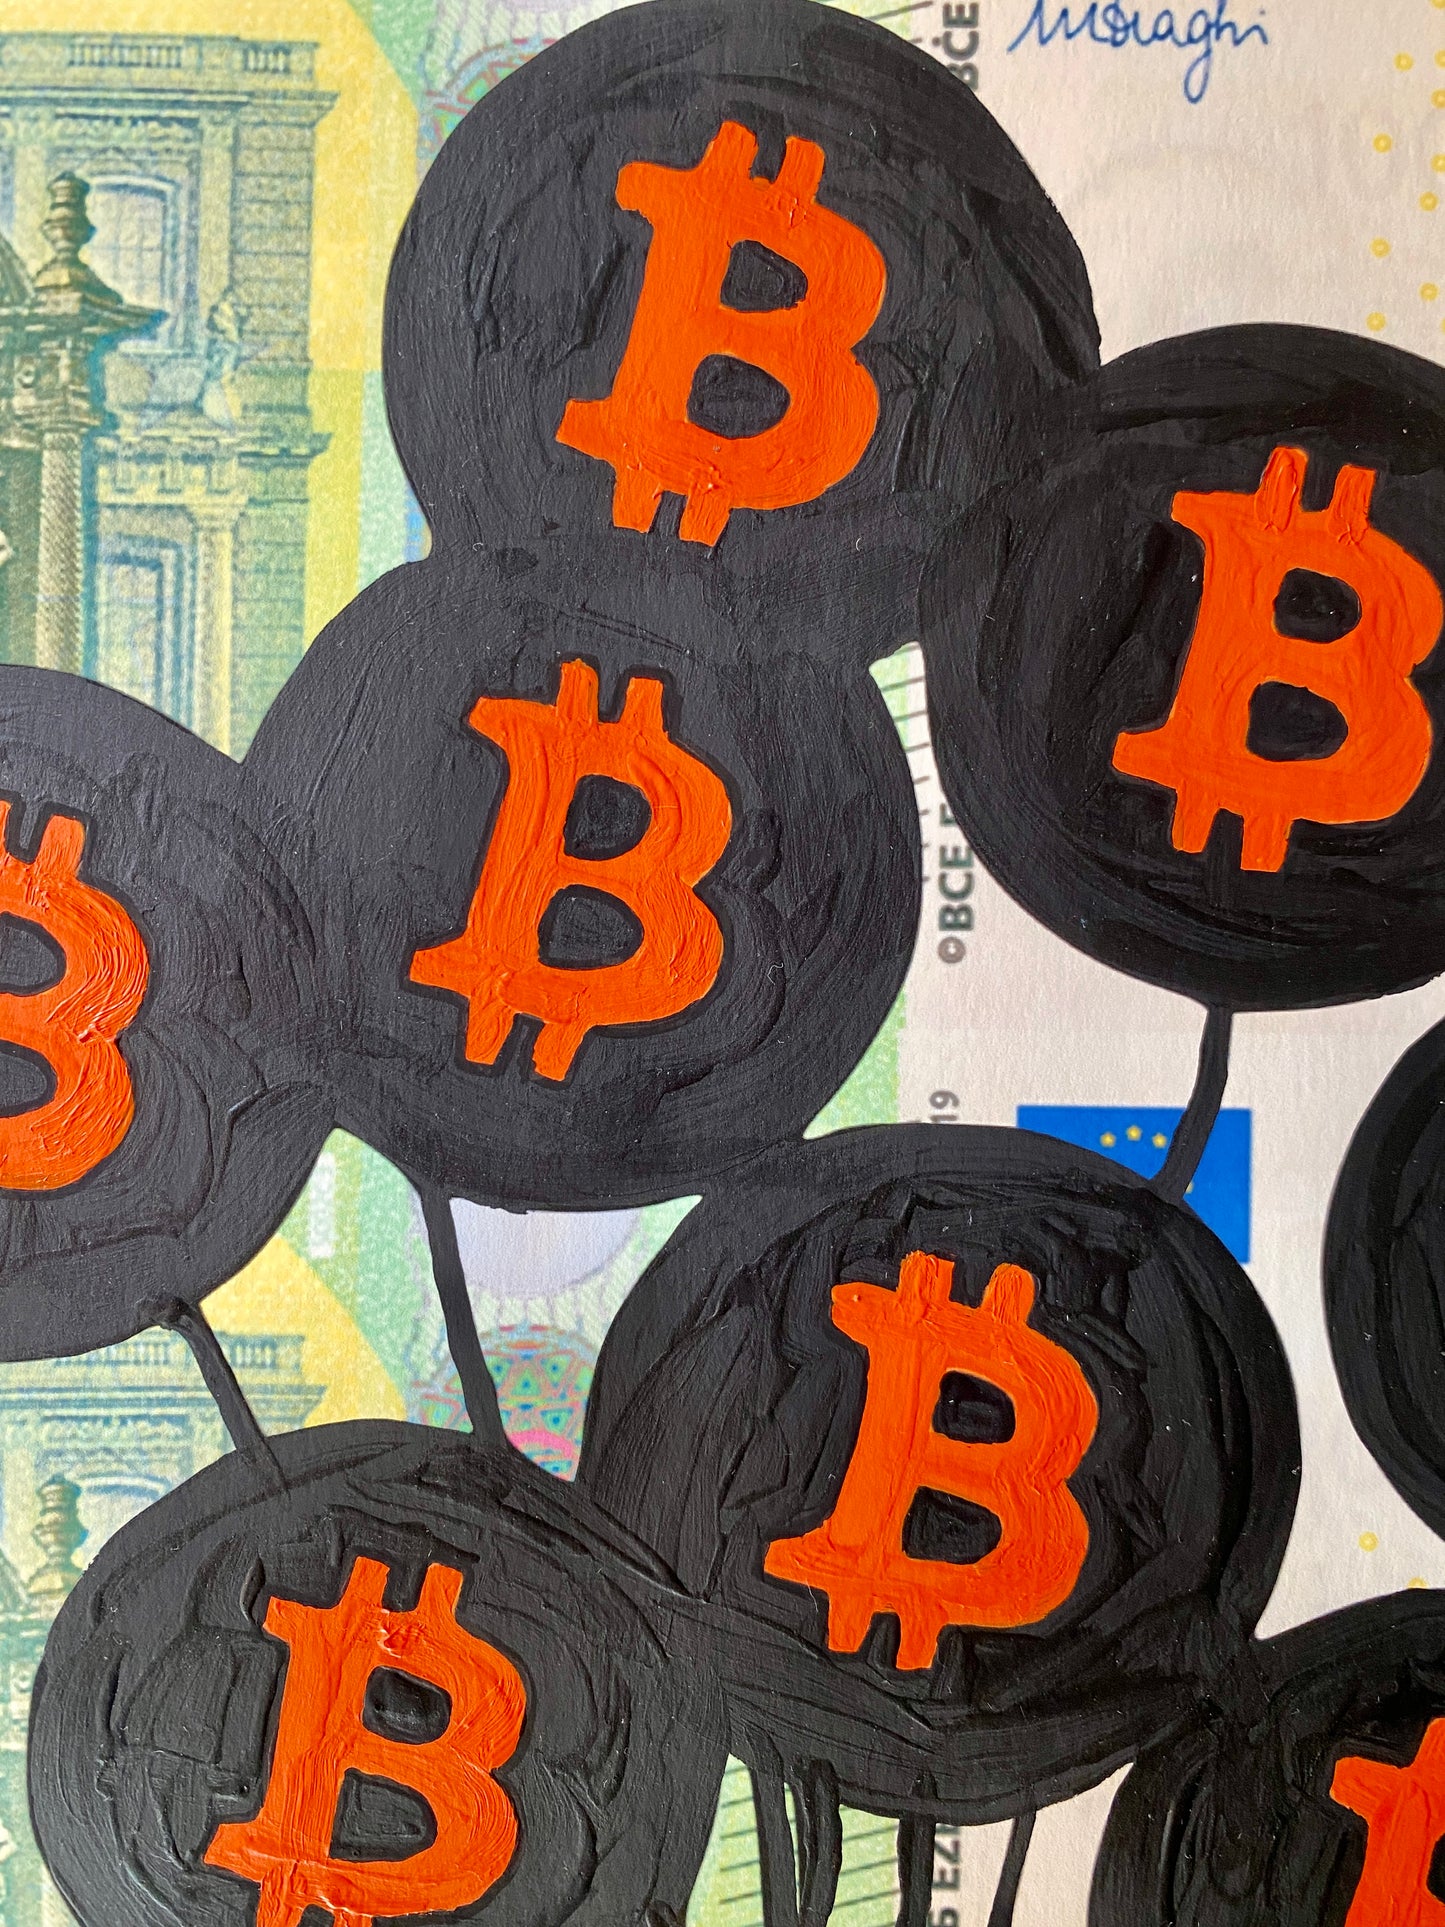 Acrylic Paint "Bitcoin is Borderless"